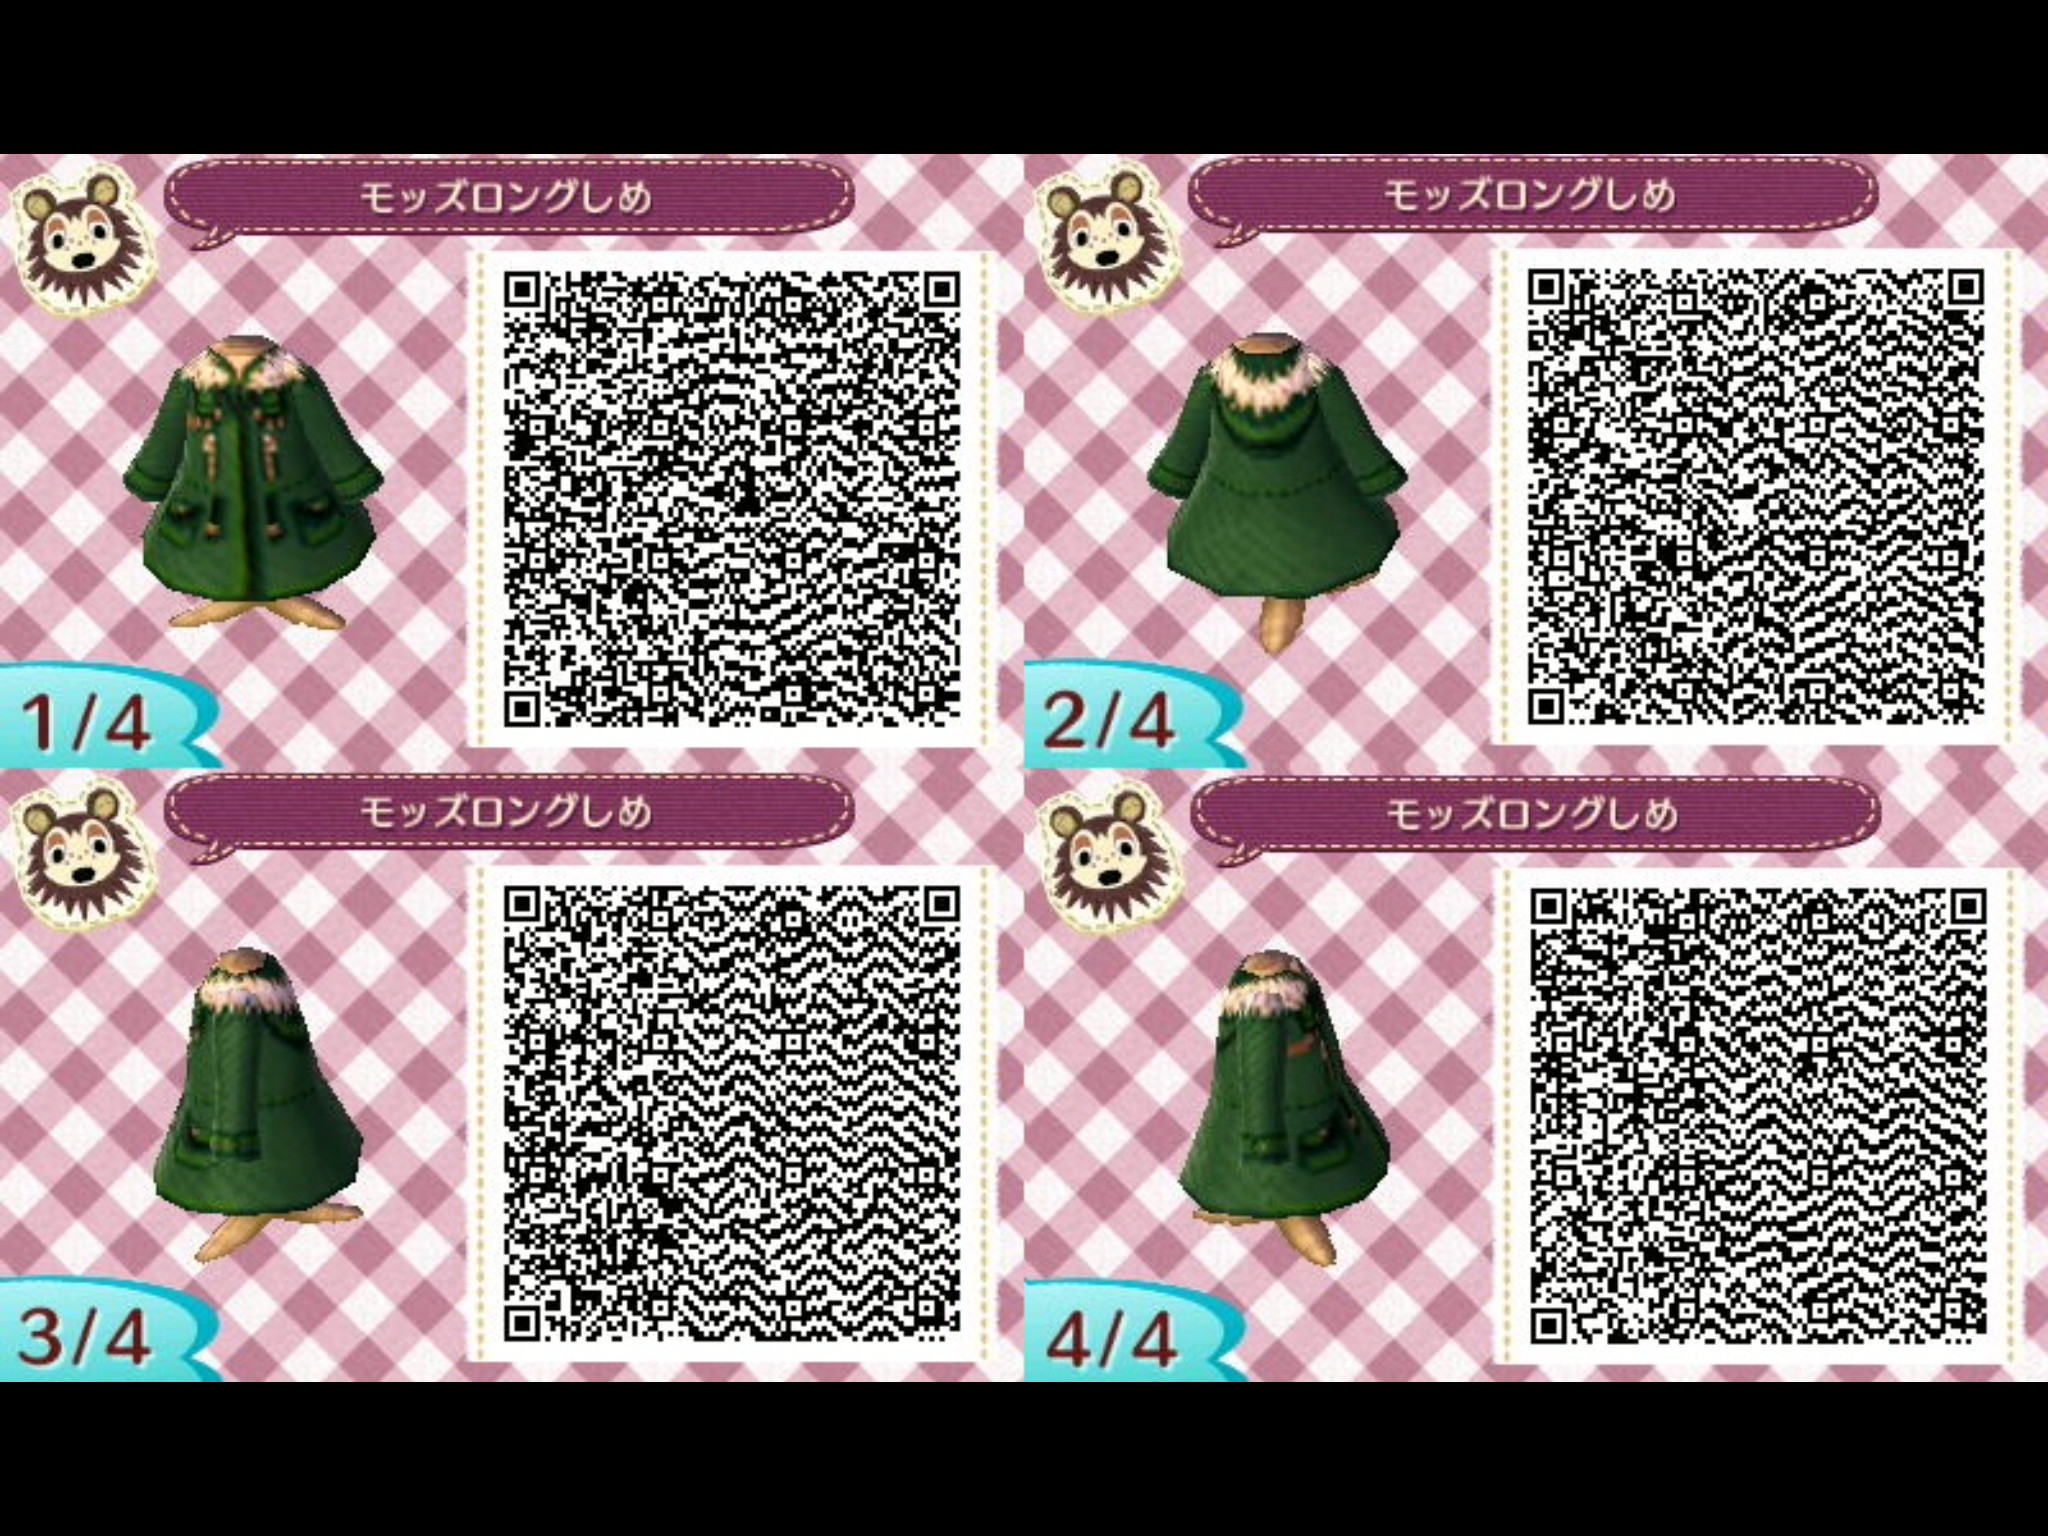 2048x1536 Animal Crossing New Leaf winter coat - zipped